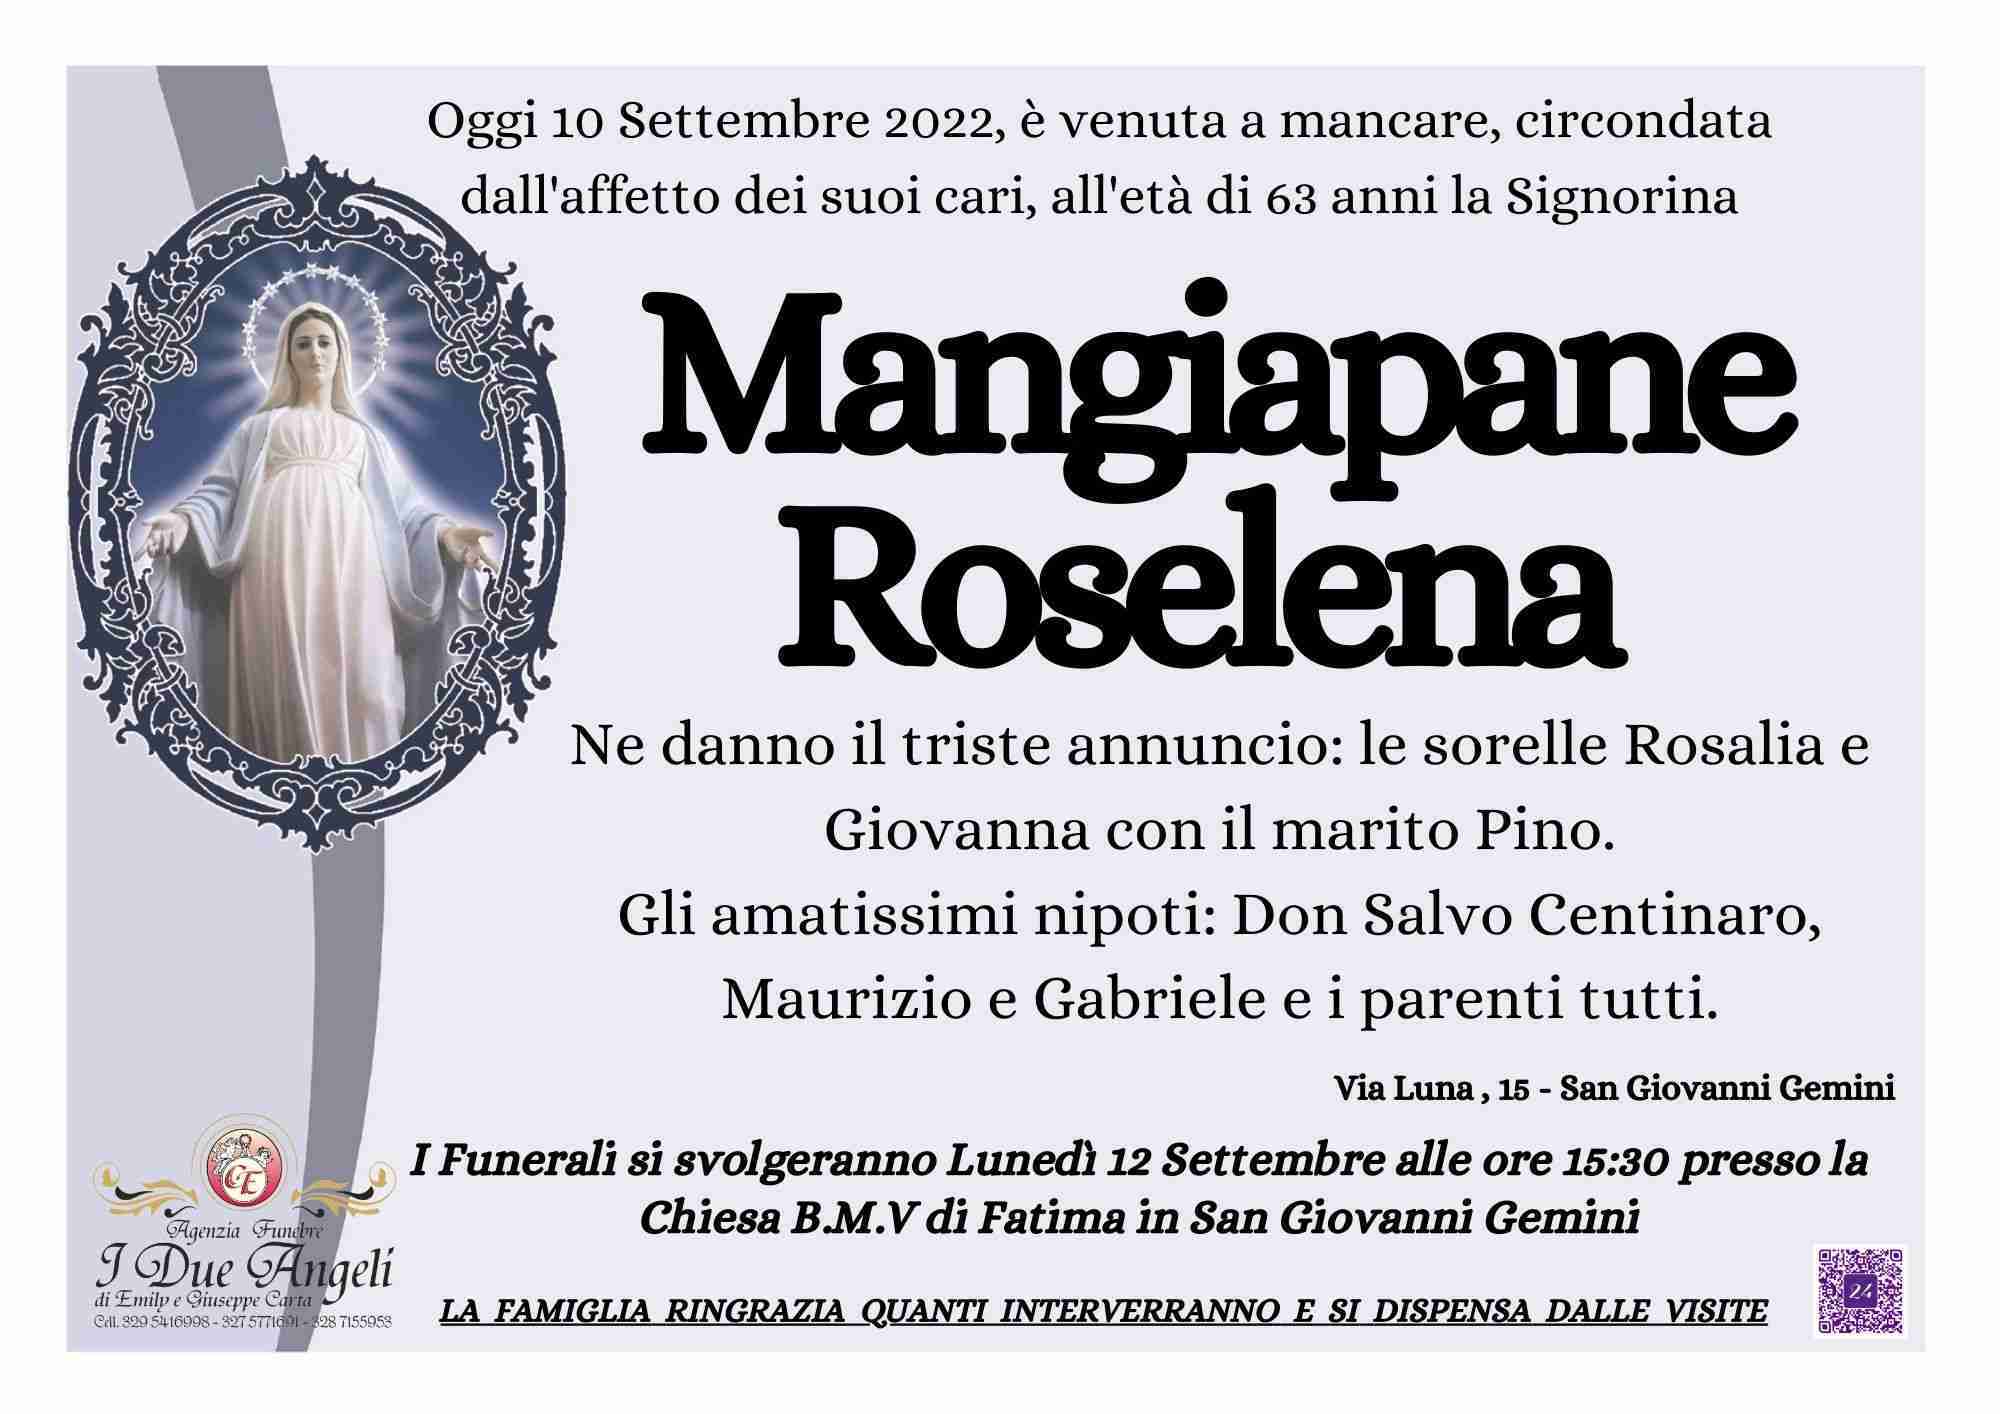 Roselena Mangiapane